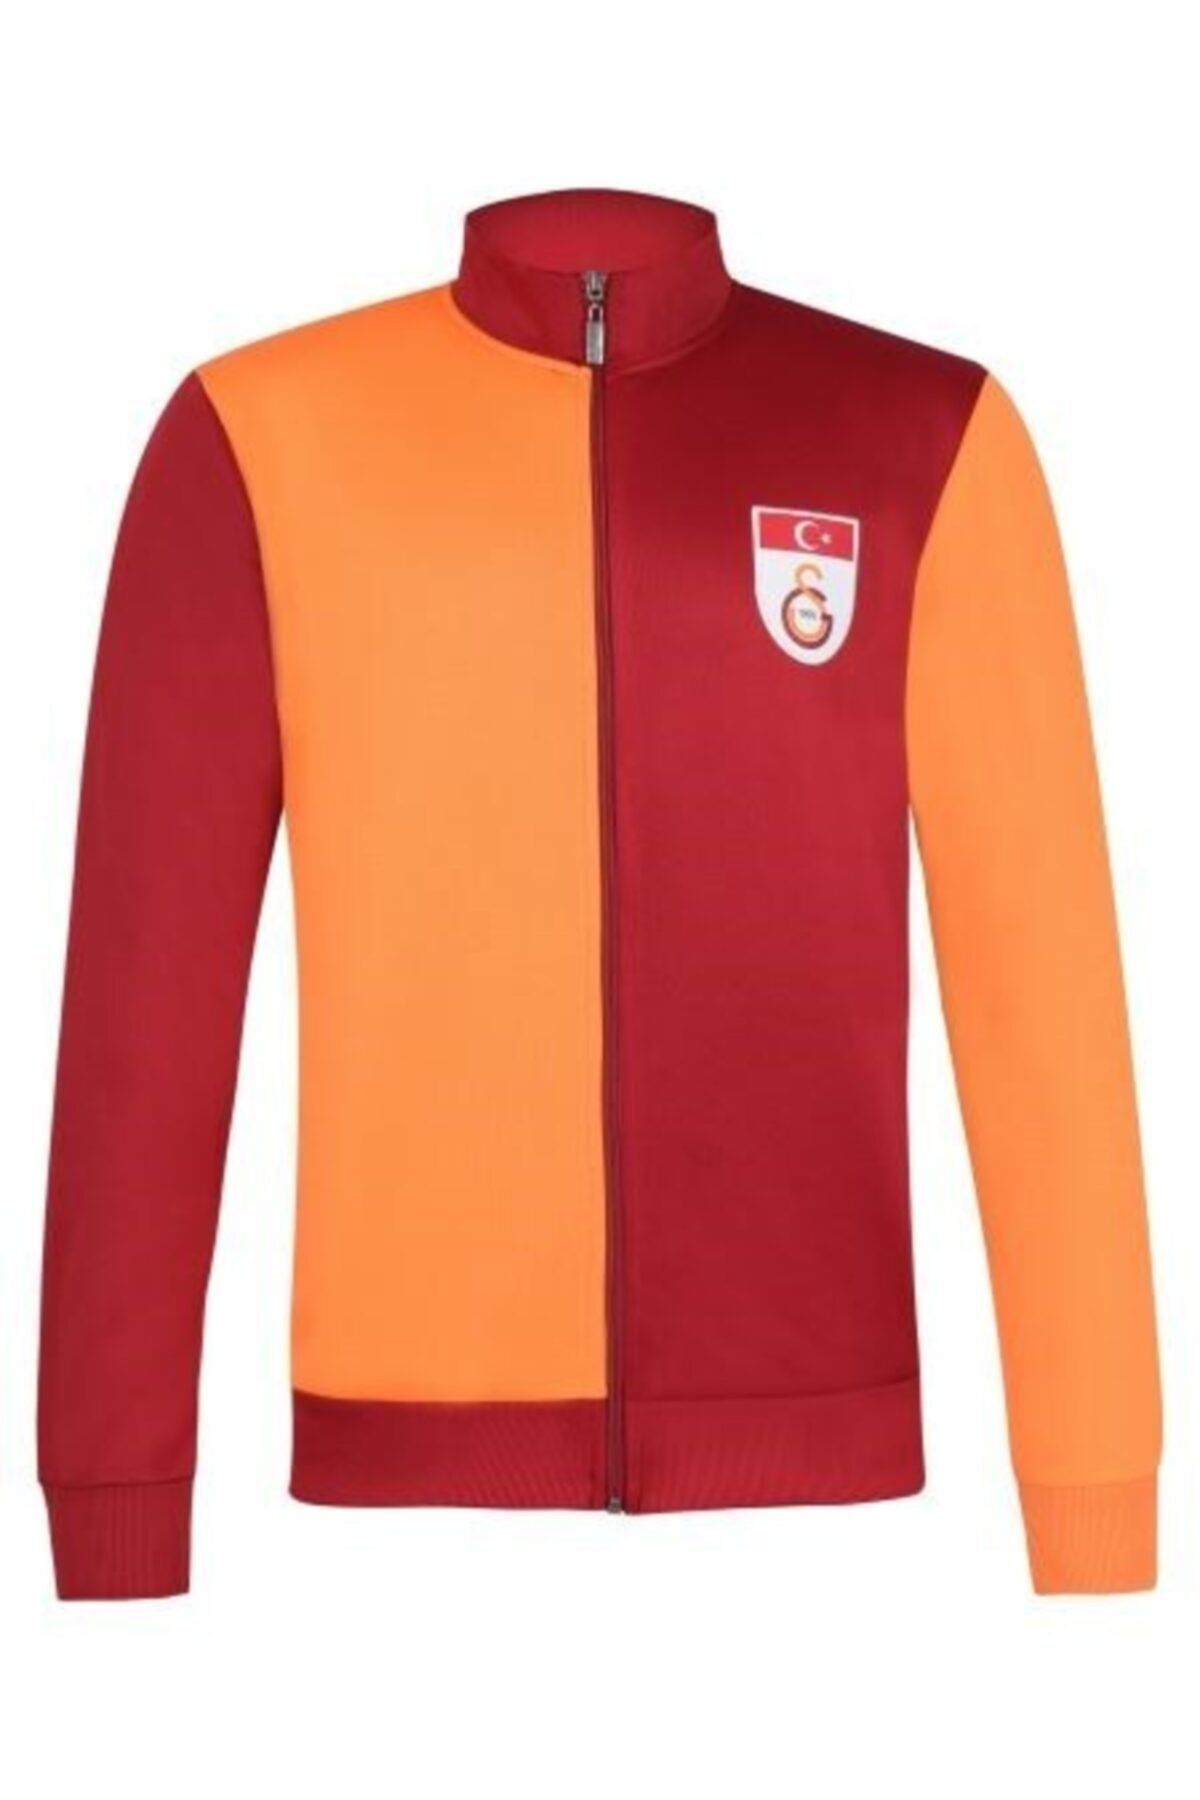 Galatasaray Metin Oktay Ceket Efsane Forma Ceket